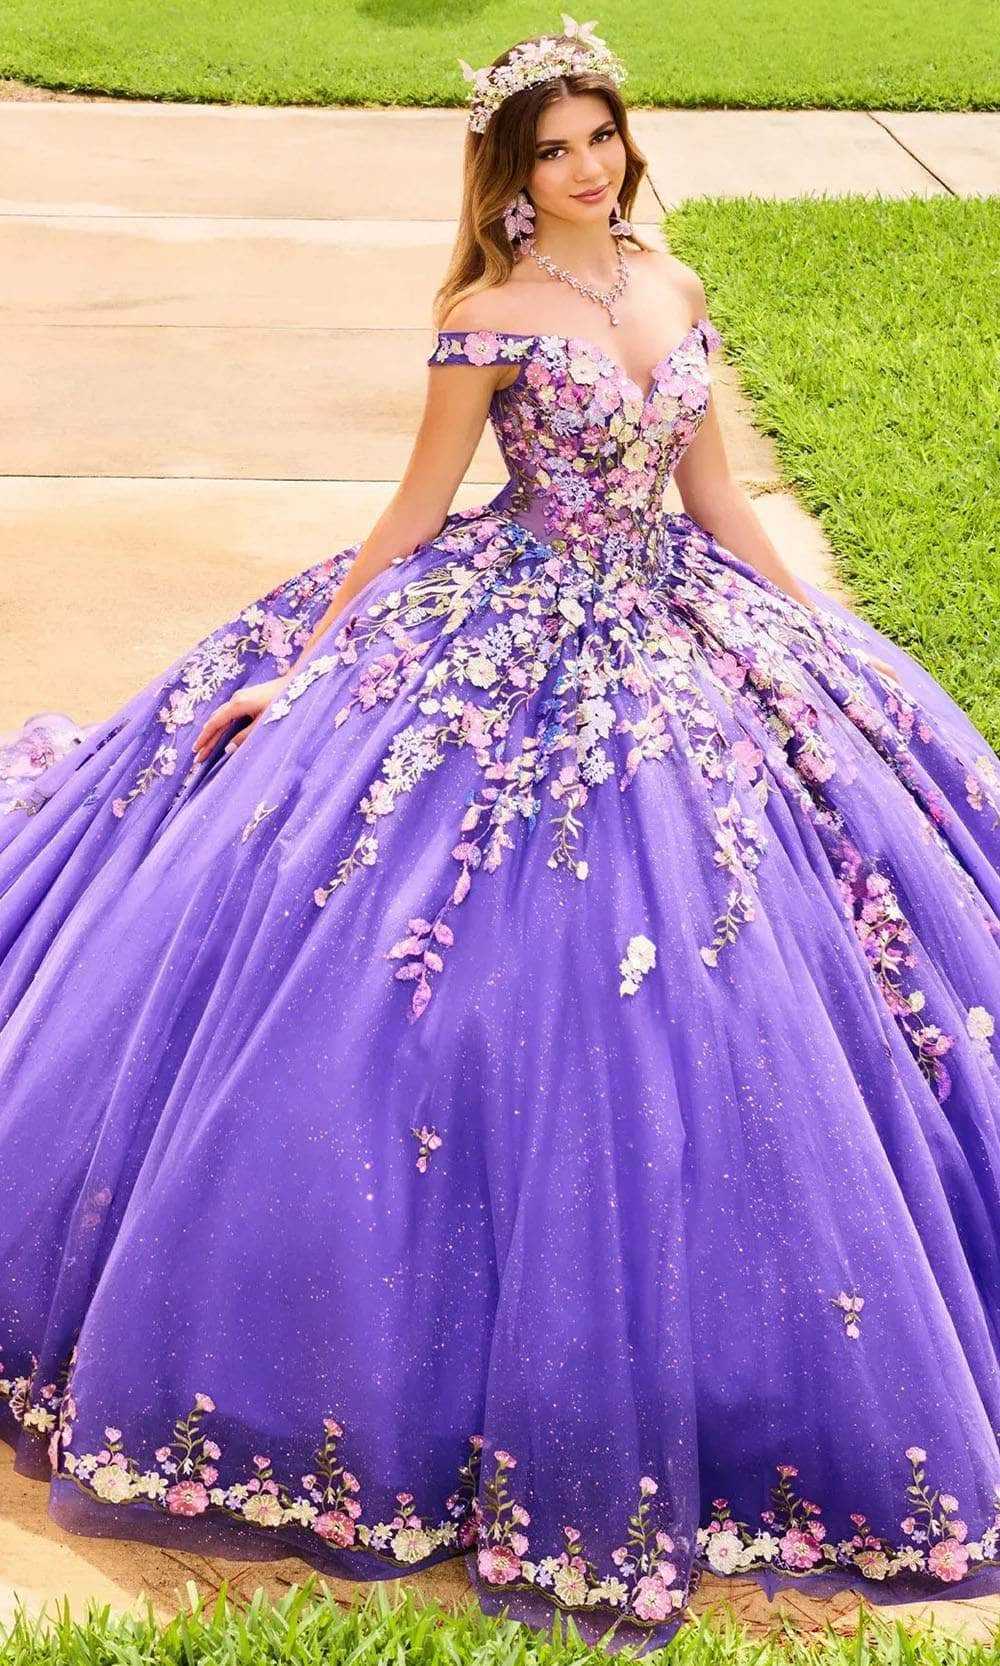 Princesa by Ariana Vara, Princesa by Ariana Vara PR30155 - Lace-Up Tie Off-Shoulder Prom Gown